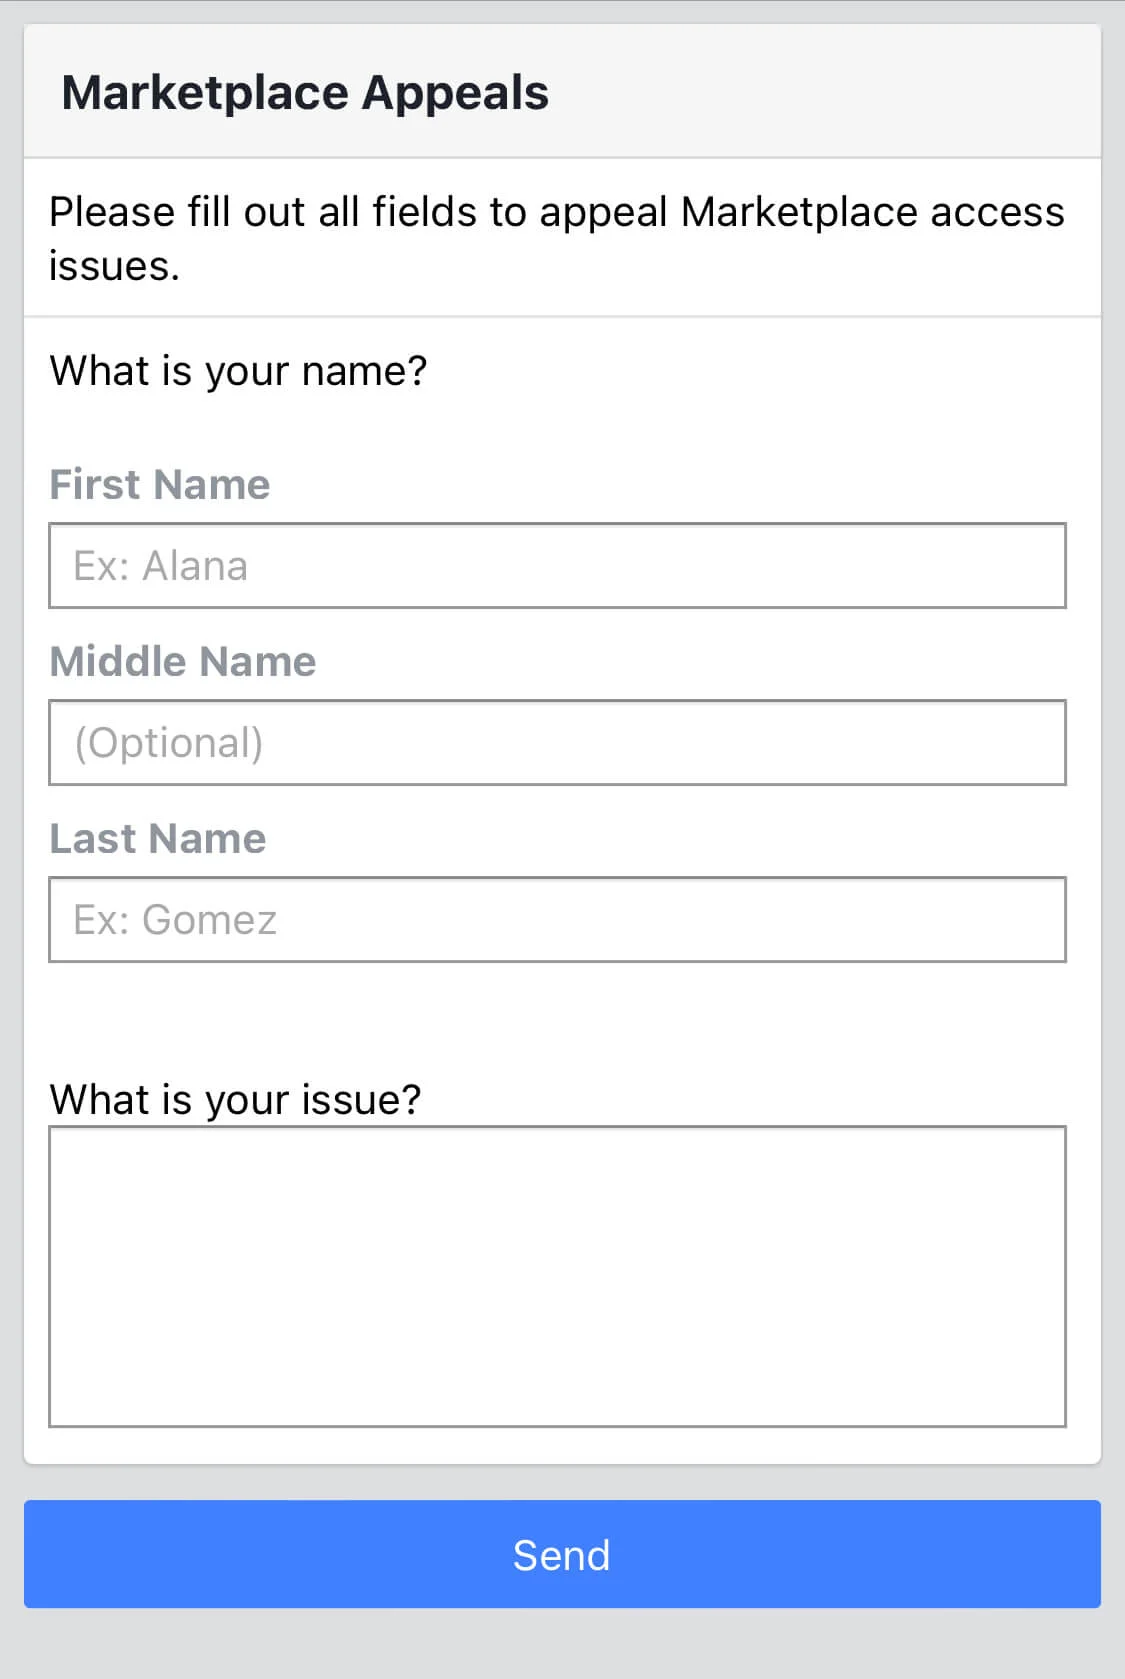 Facebook Marketplace Appeal Form